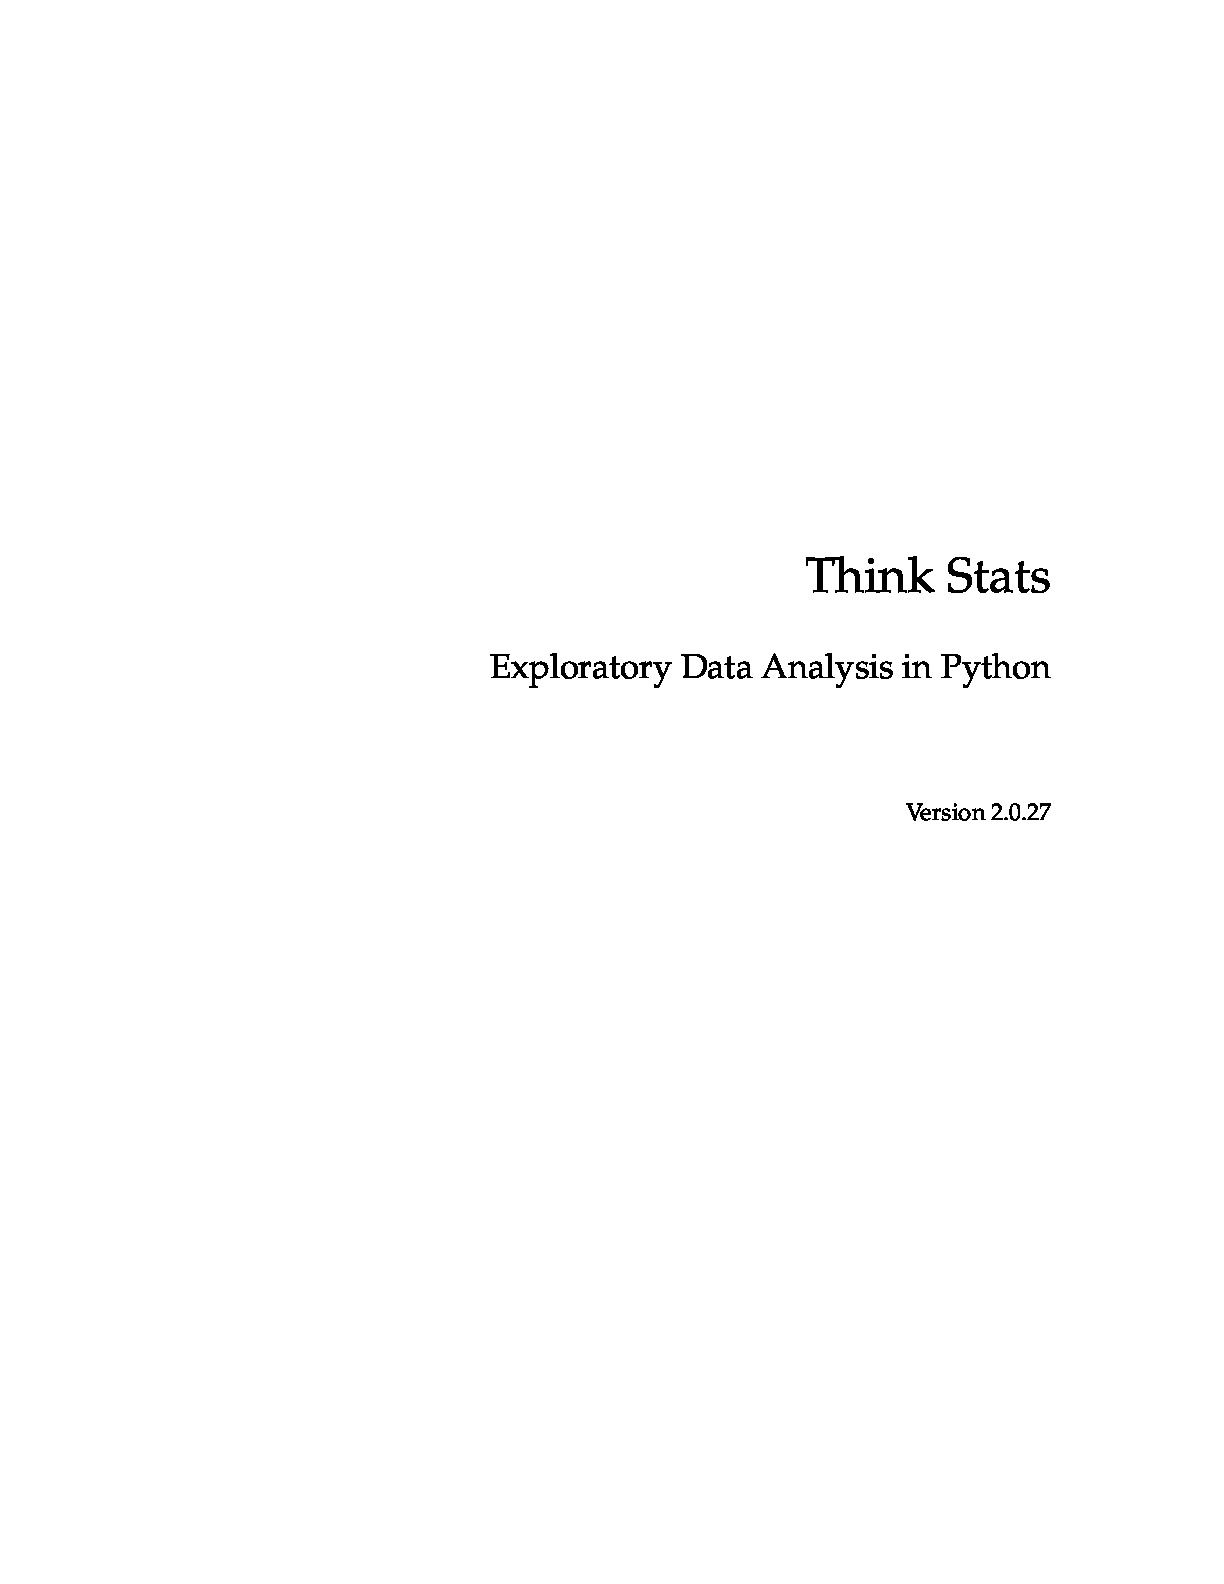 Think Stats – Exploratory Data Analysis in Python